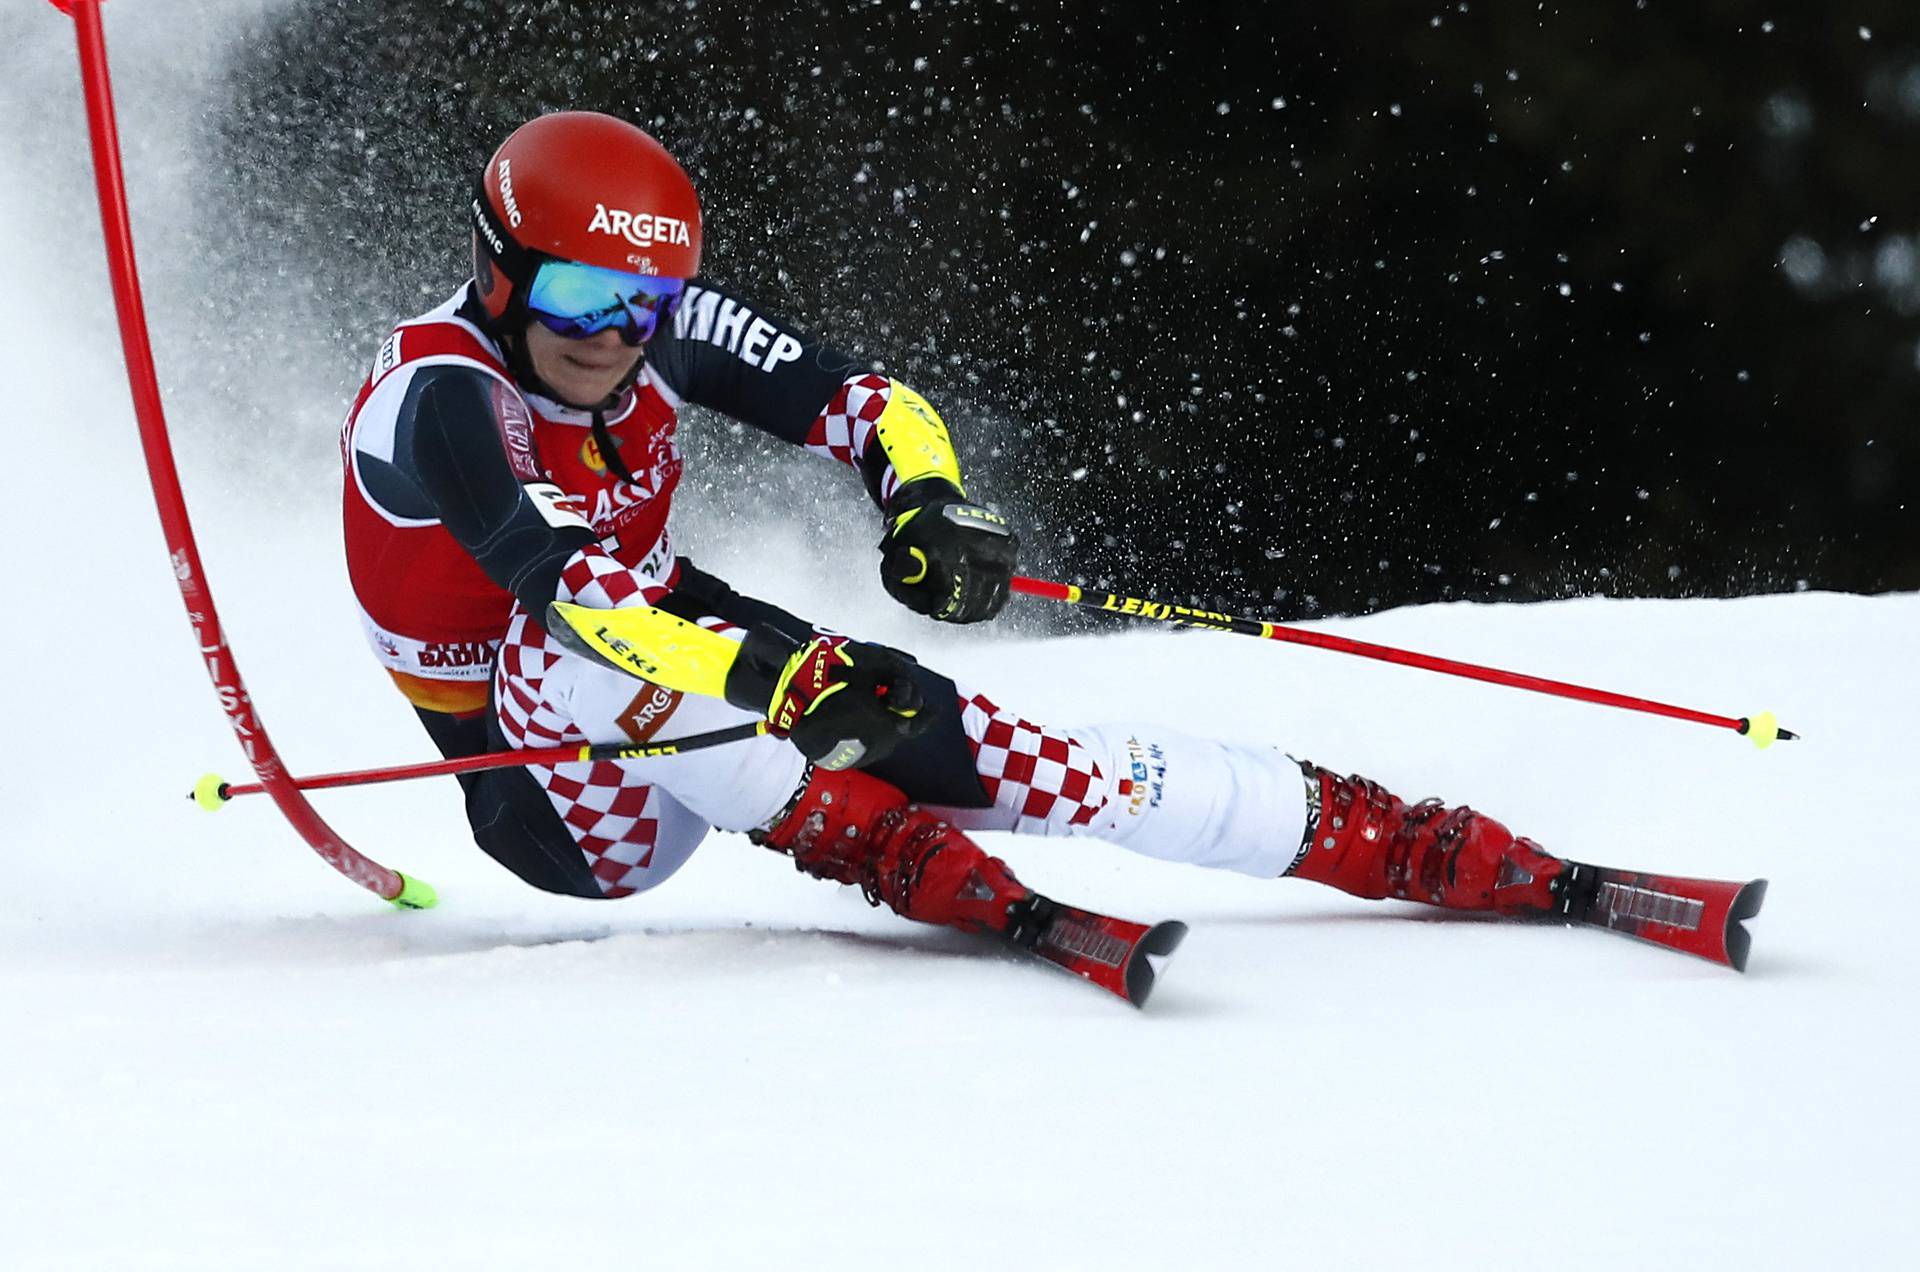 FIS Alpine Ski World Cup Men's Giant Slalom